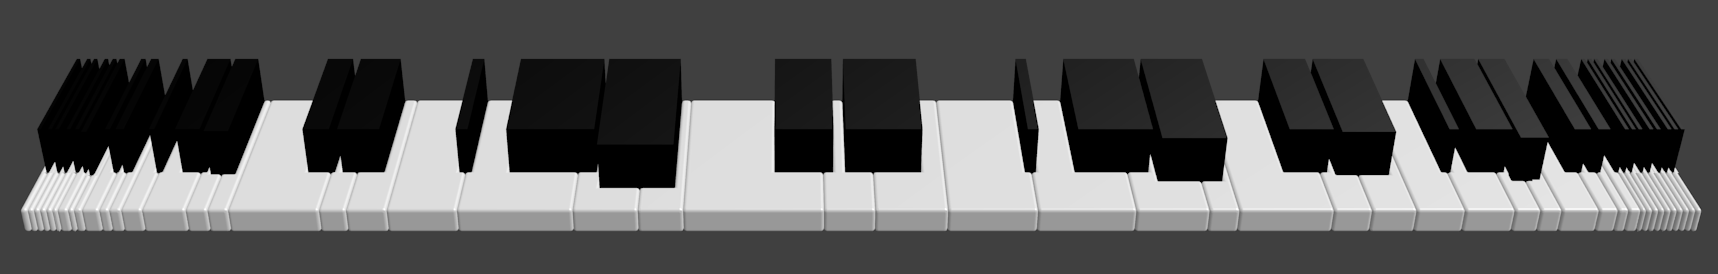 Fig-13-keyboard